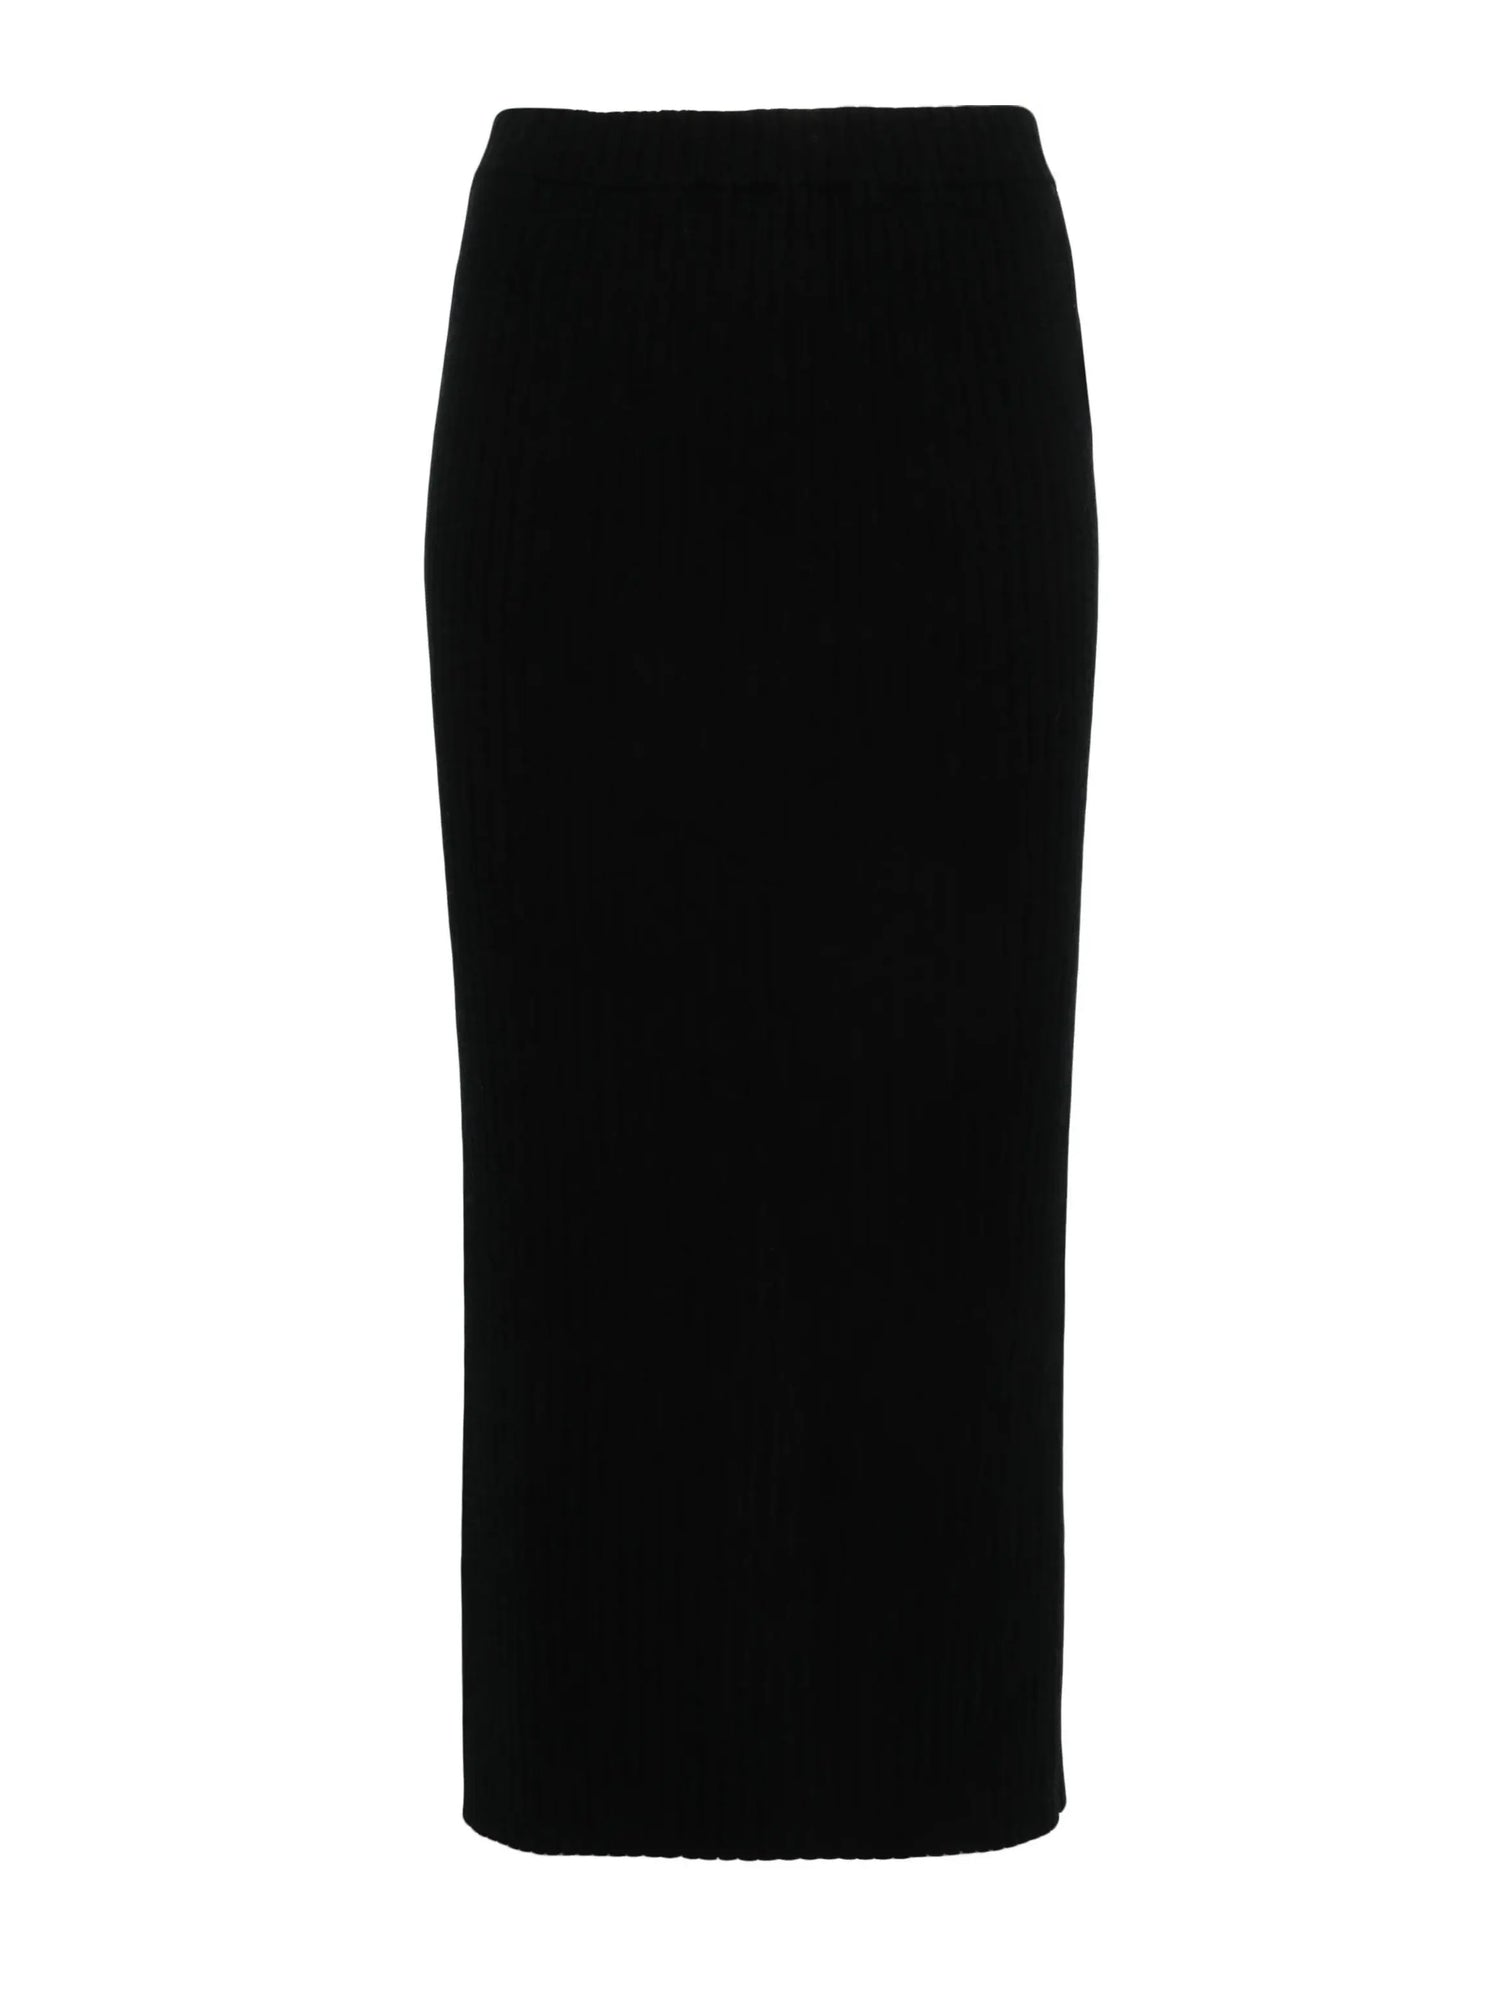 Cashmere skirt, black